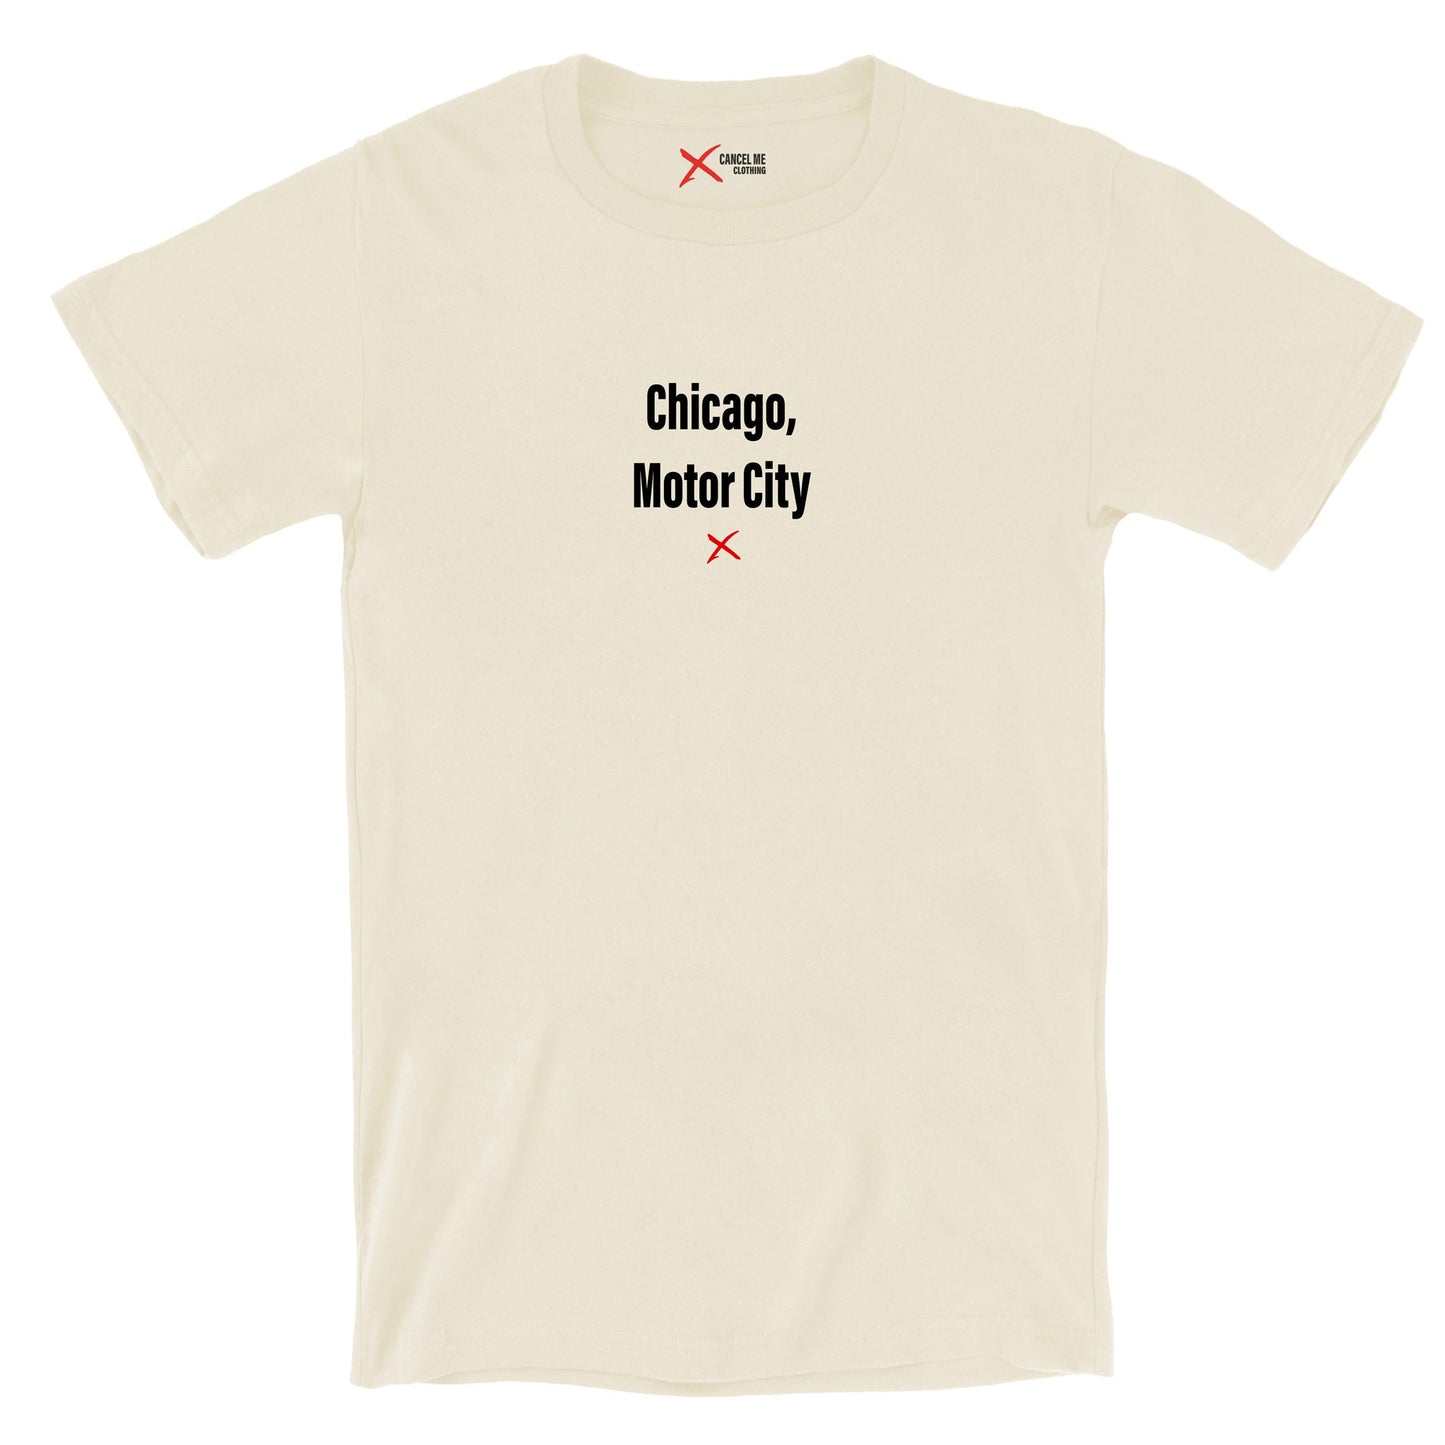 Chicago, Motor City - Shirt